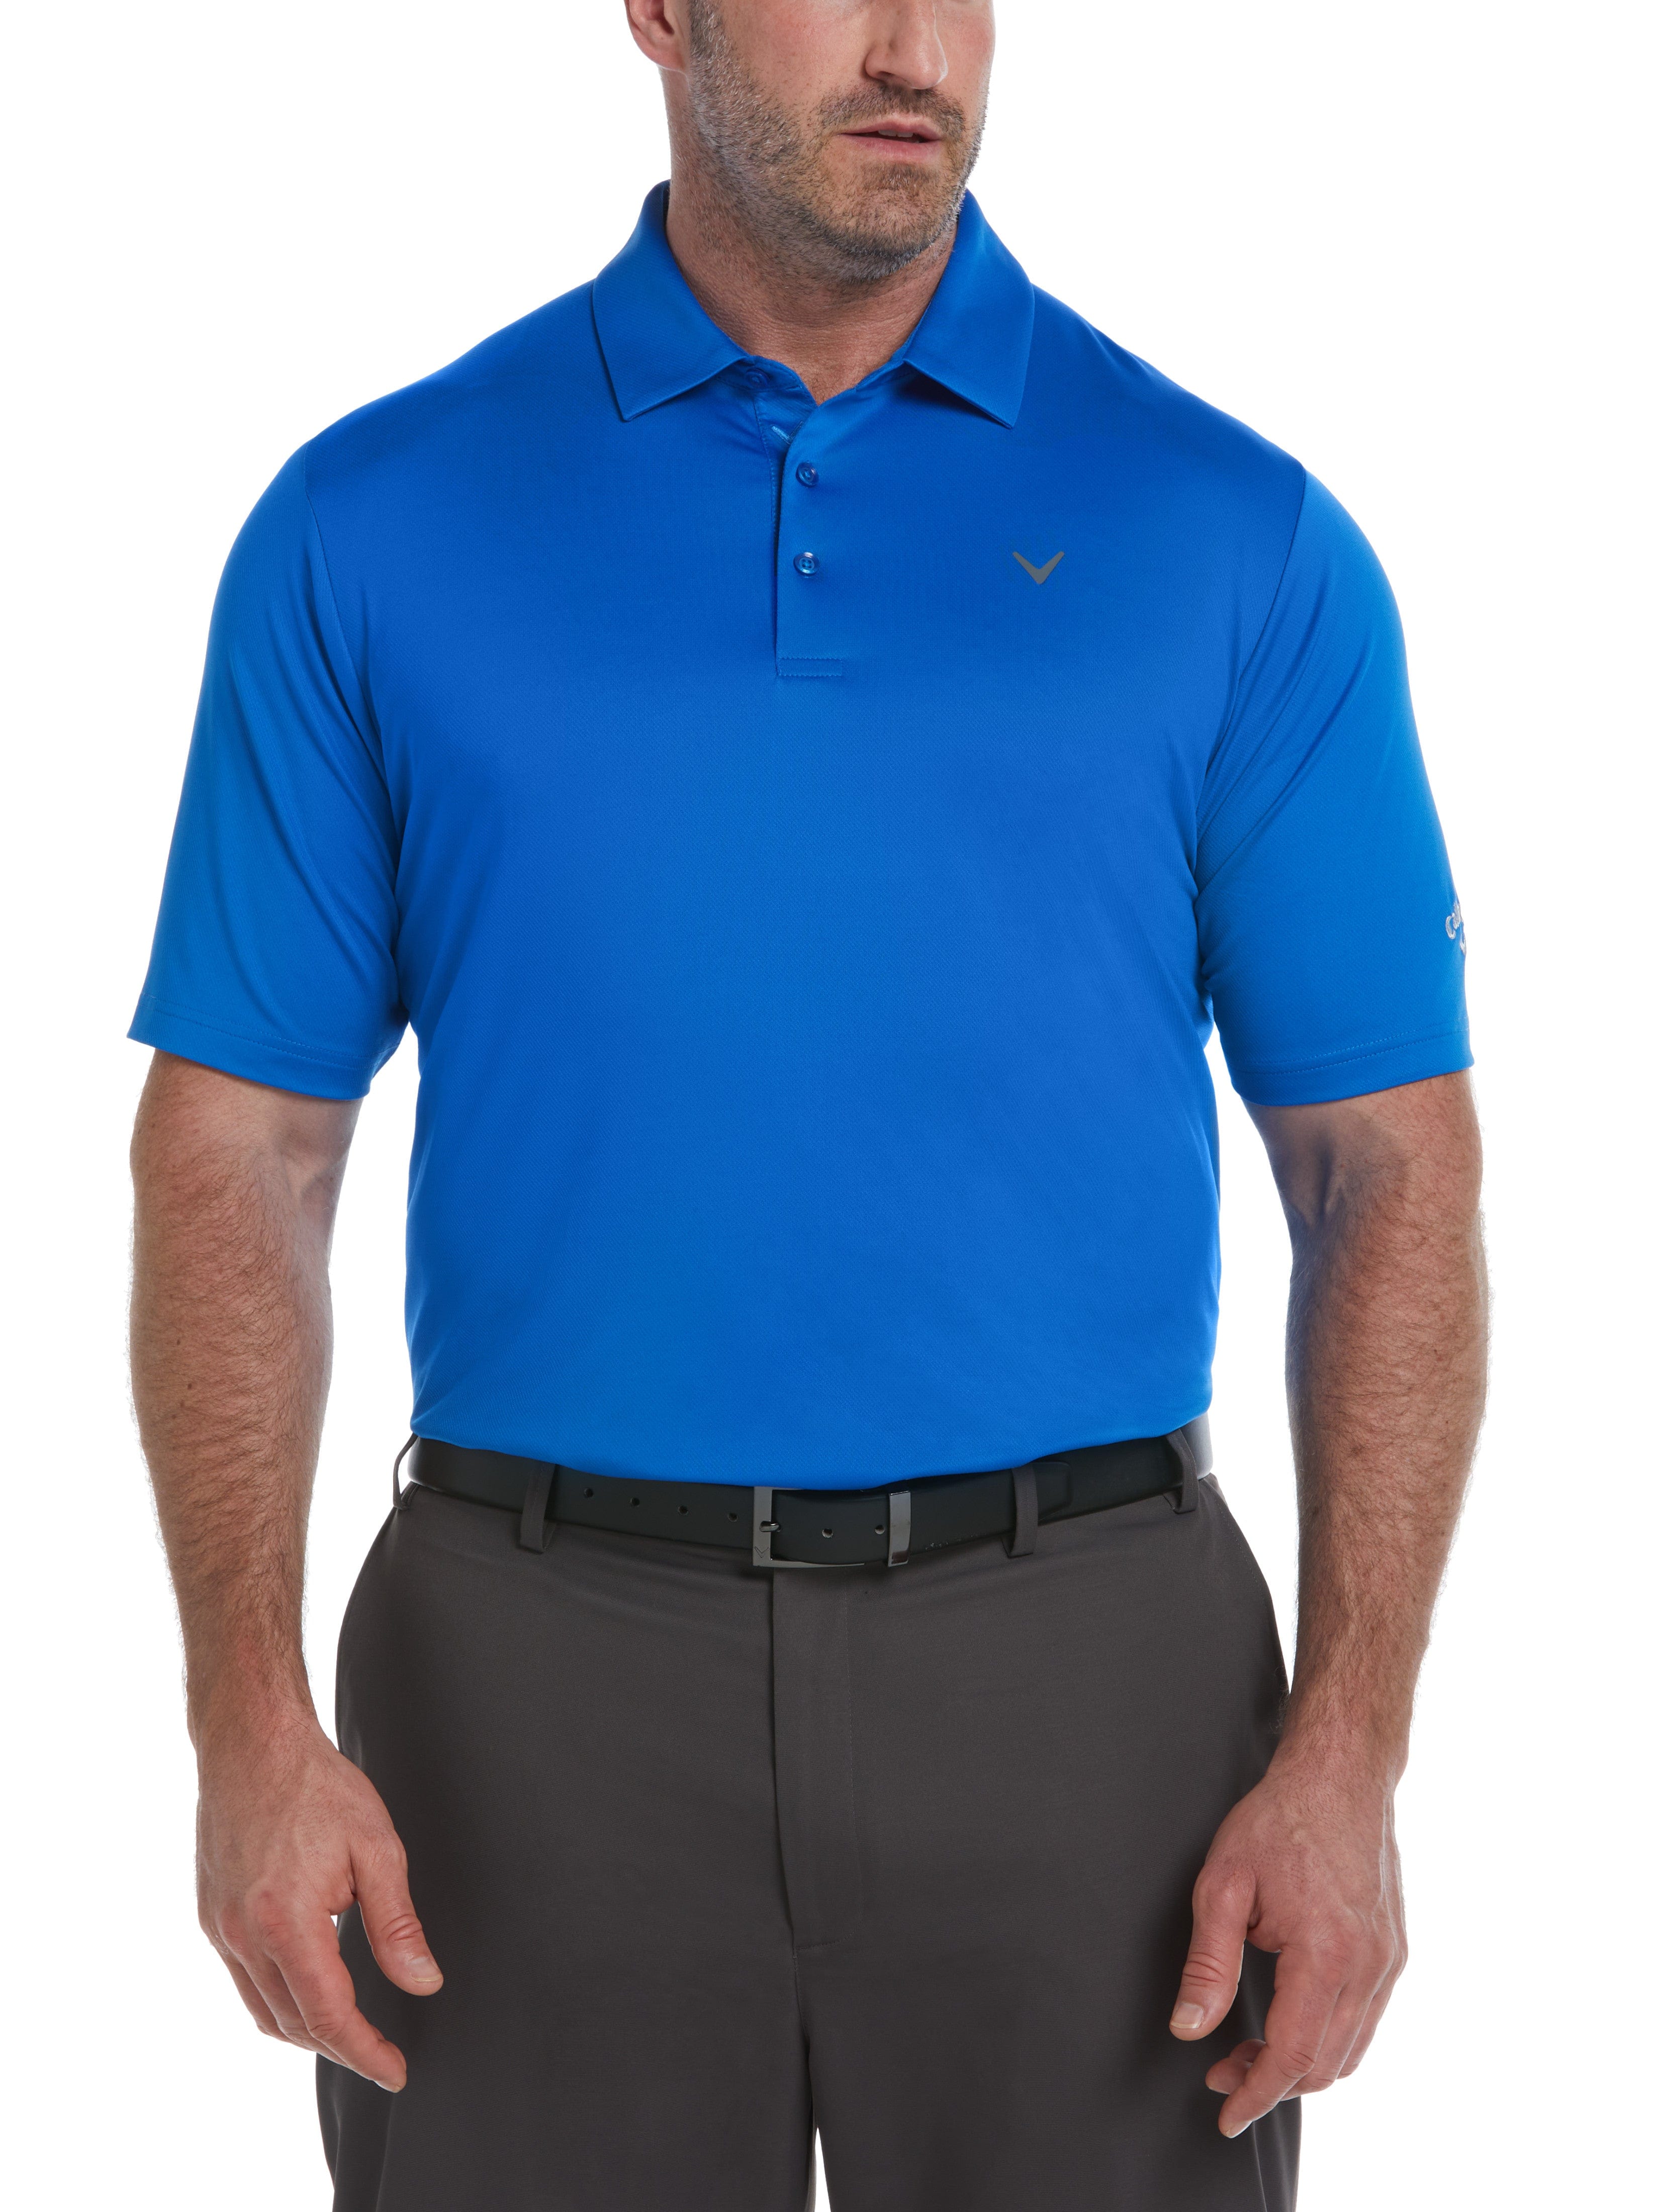 Callaway Apparel Mens Big & Tall Solid Swing Tech Golf Polo Shirt, Size 1X, Magnetic Blue, Polyester/Elastane | Golf Apparel Shop